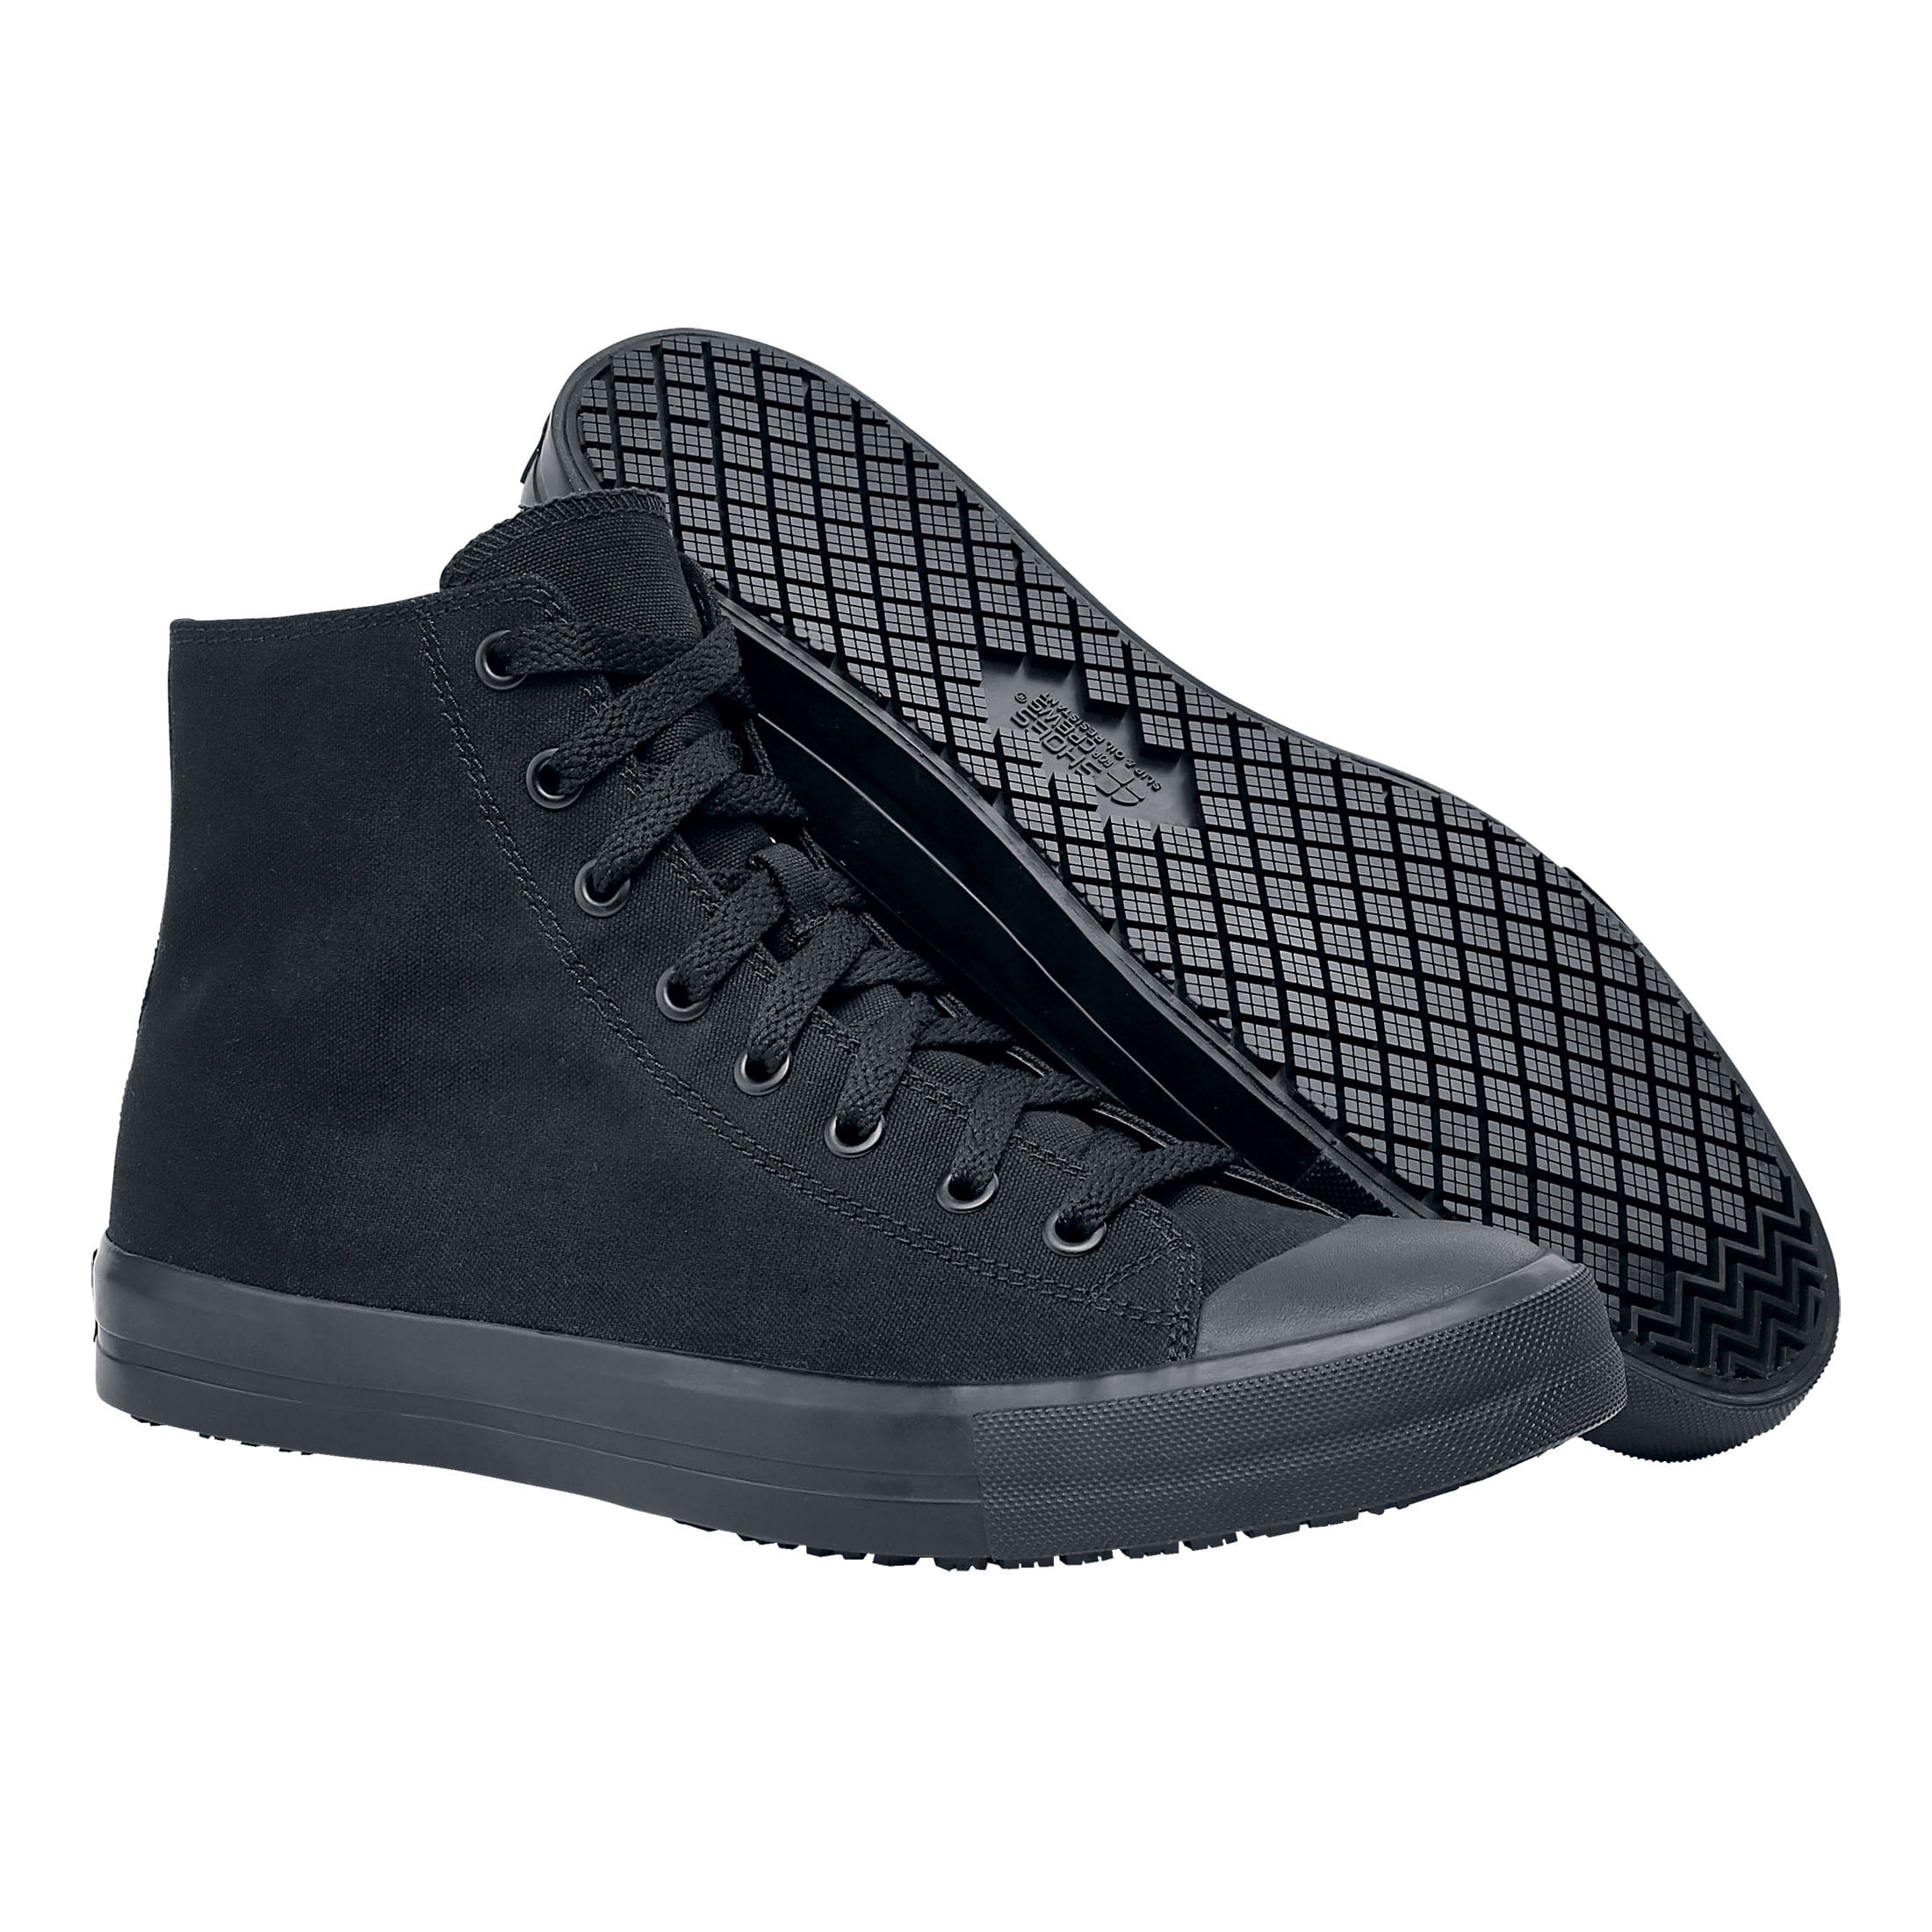 Shoes for Crews Pembroke, Men's, Women's, Unisex Slip Resistant, High Top  Work Sneakers, Black Canvas 